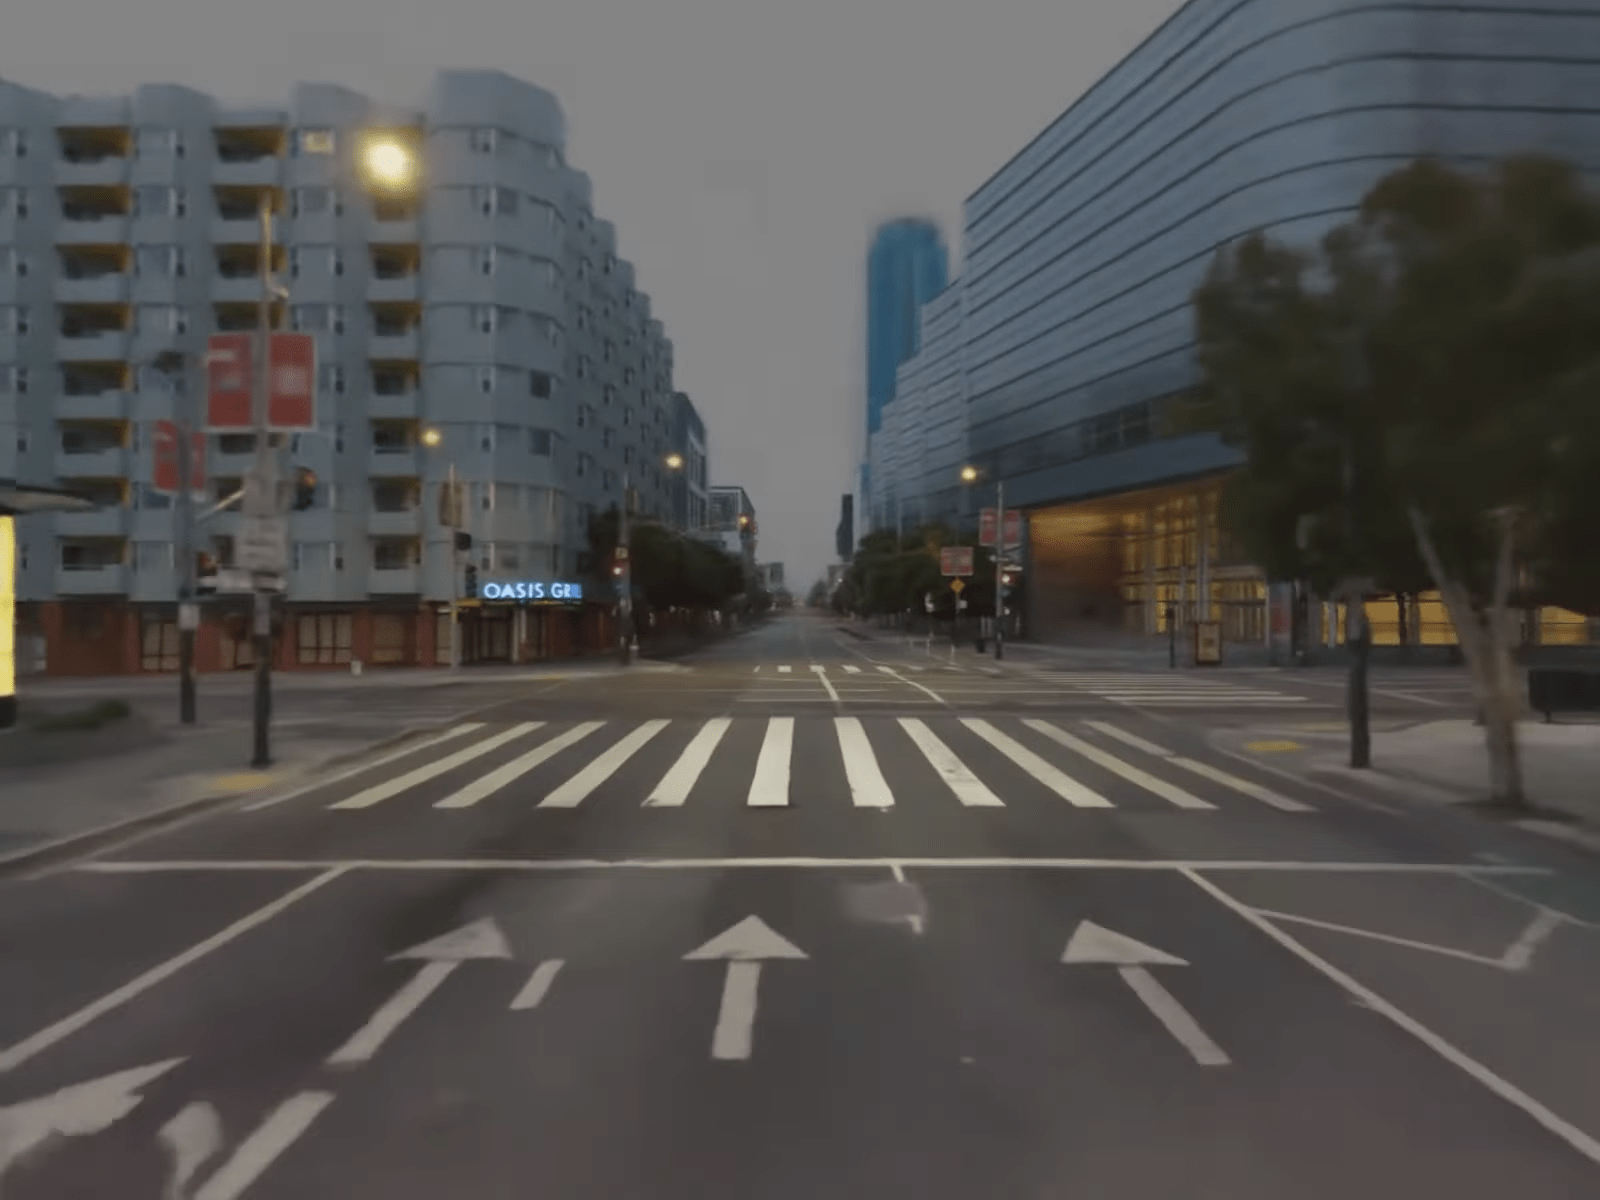 Google Maps: AI technology enables Street View 3D